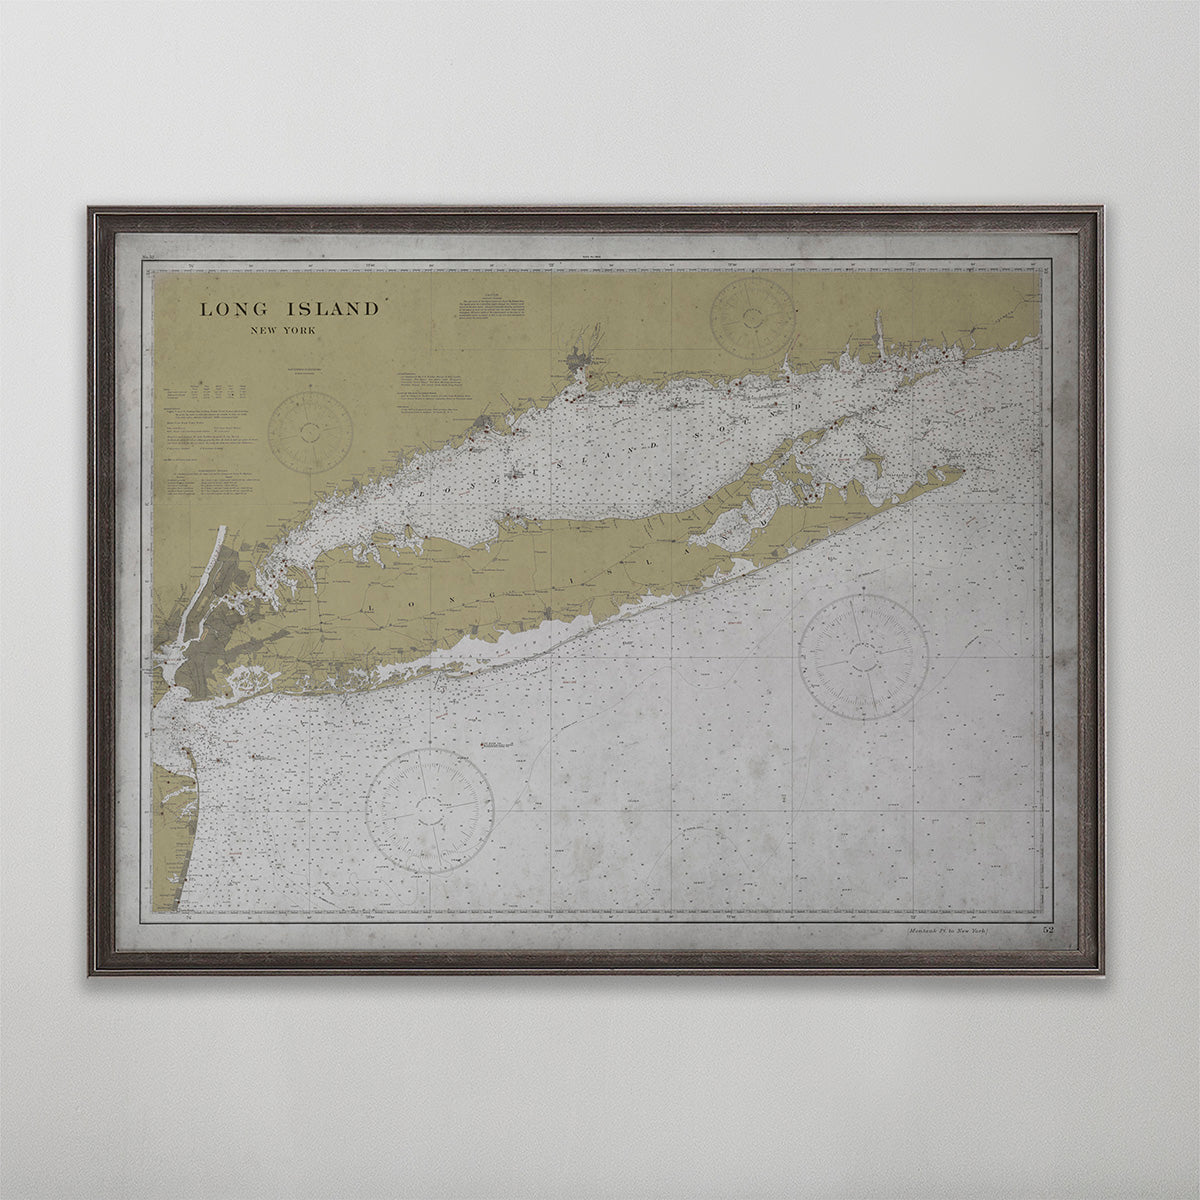 Old vintage historic nautical chart of Long Island wall art home decor. 